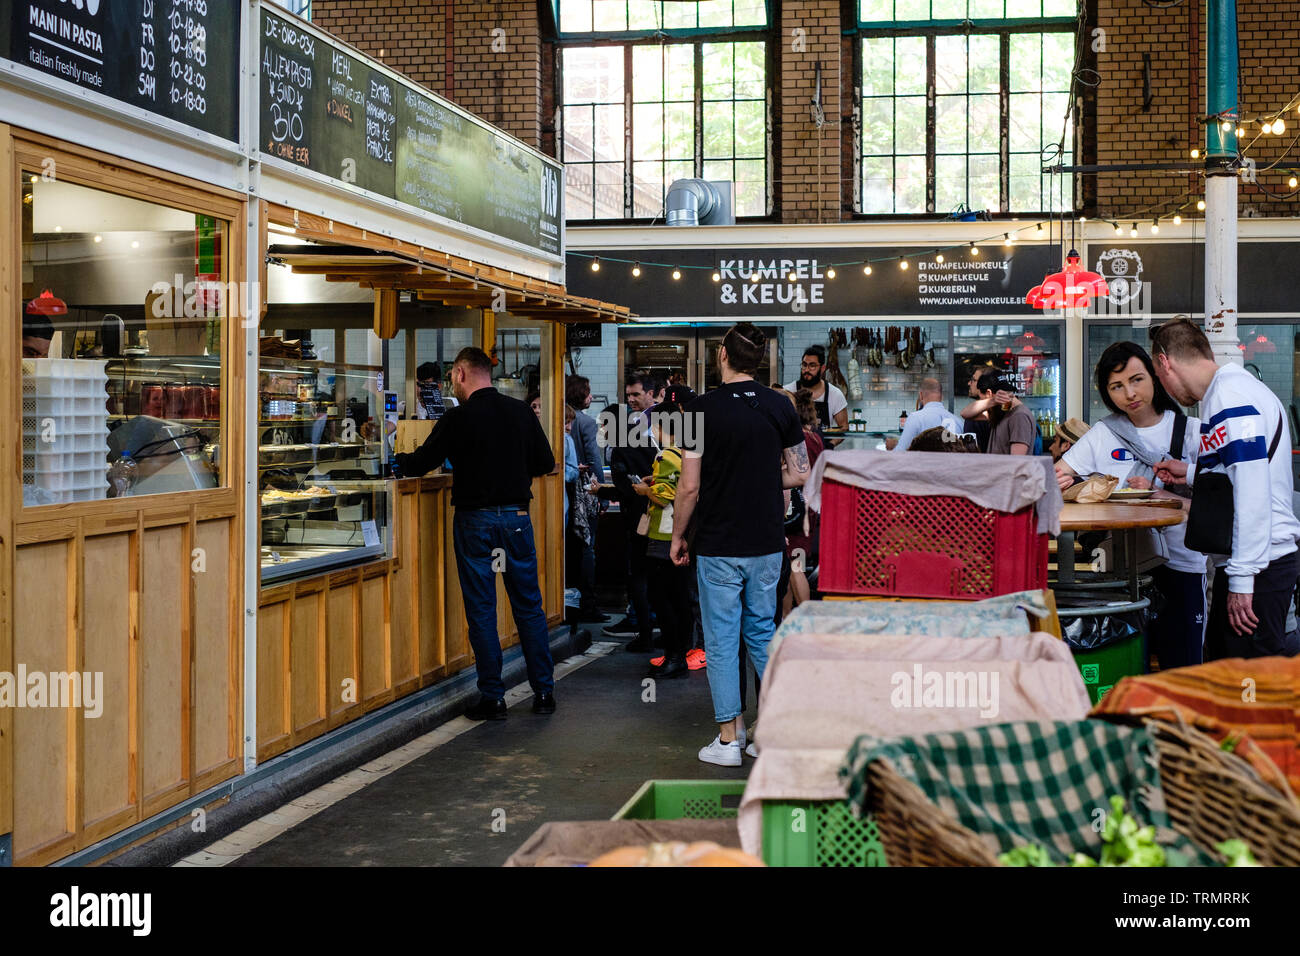 Markthalle Neun (Market hall nine) - indoor market dating from 1891, located in the Kreuzberg area of Berlin, Germany Stock Photo